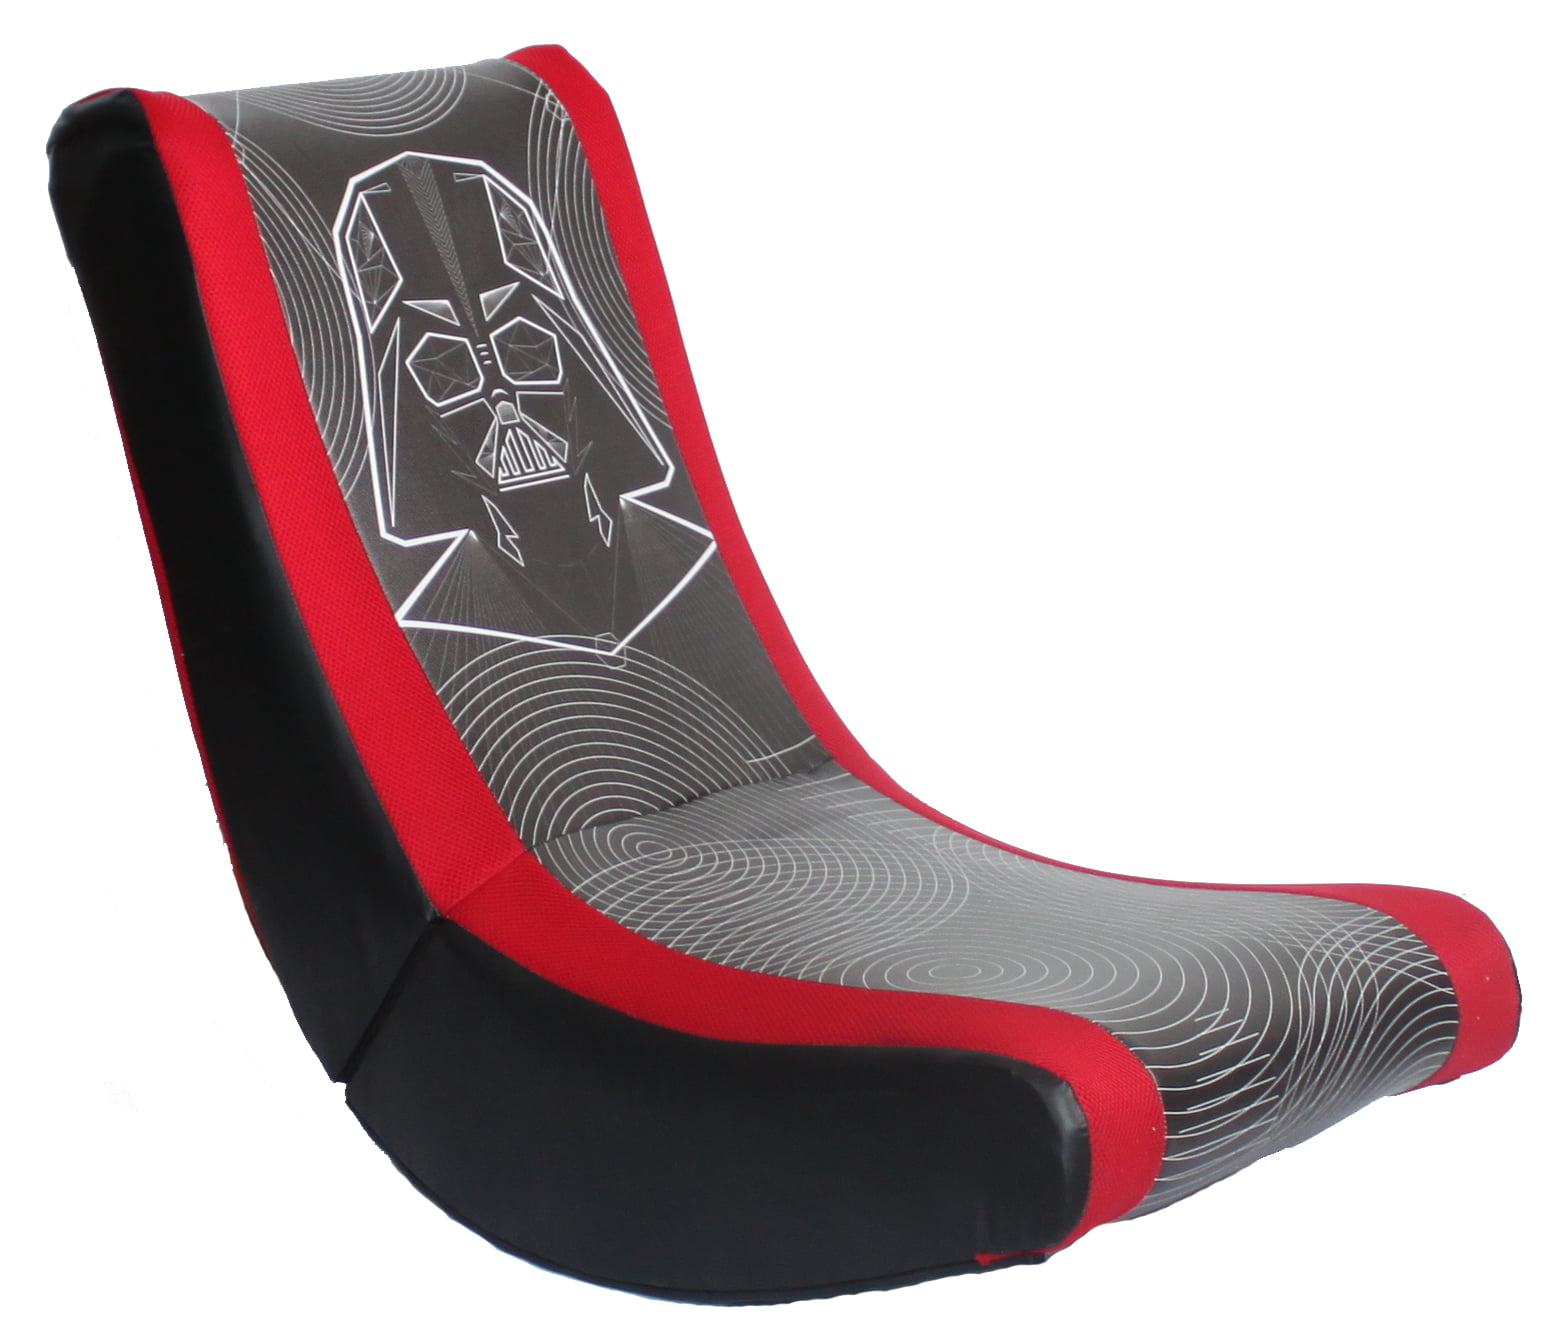 Star Wars Movie Darth Vader Video Gaming Rocker Chair